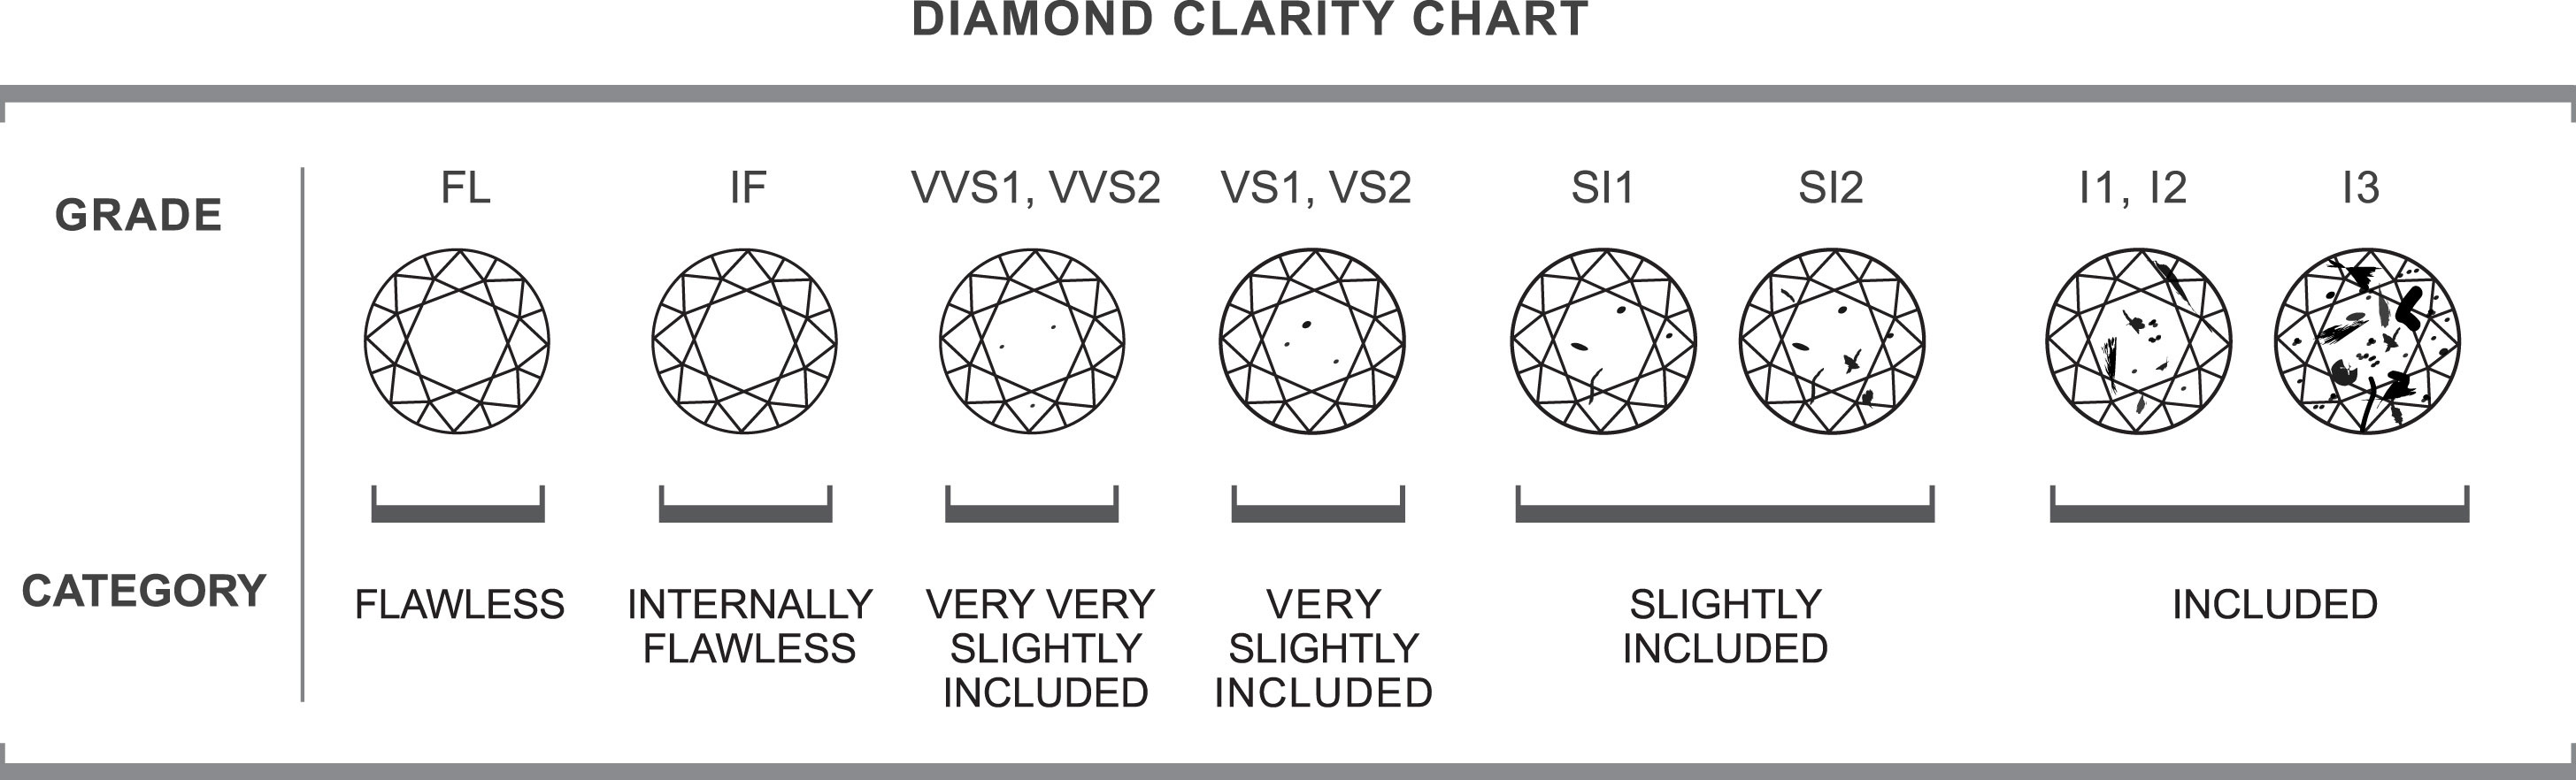 4 C Chart For Diamonds